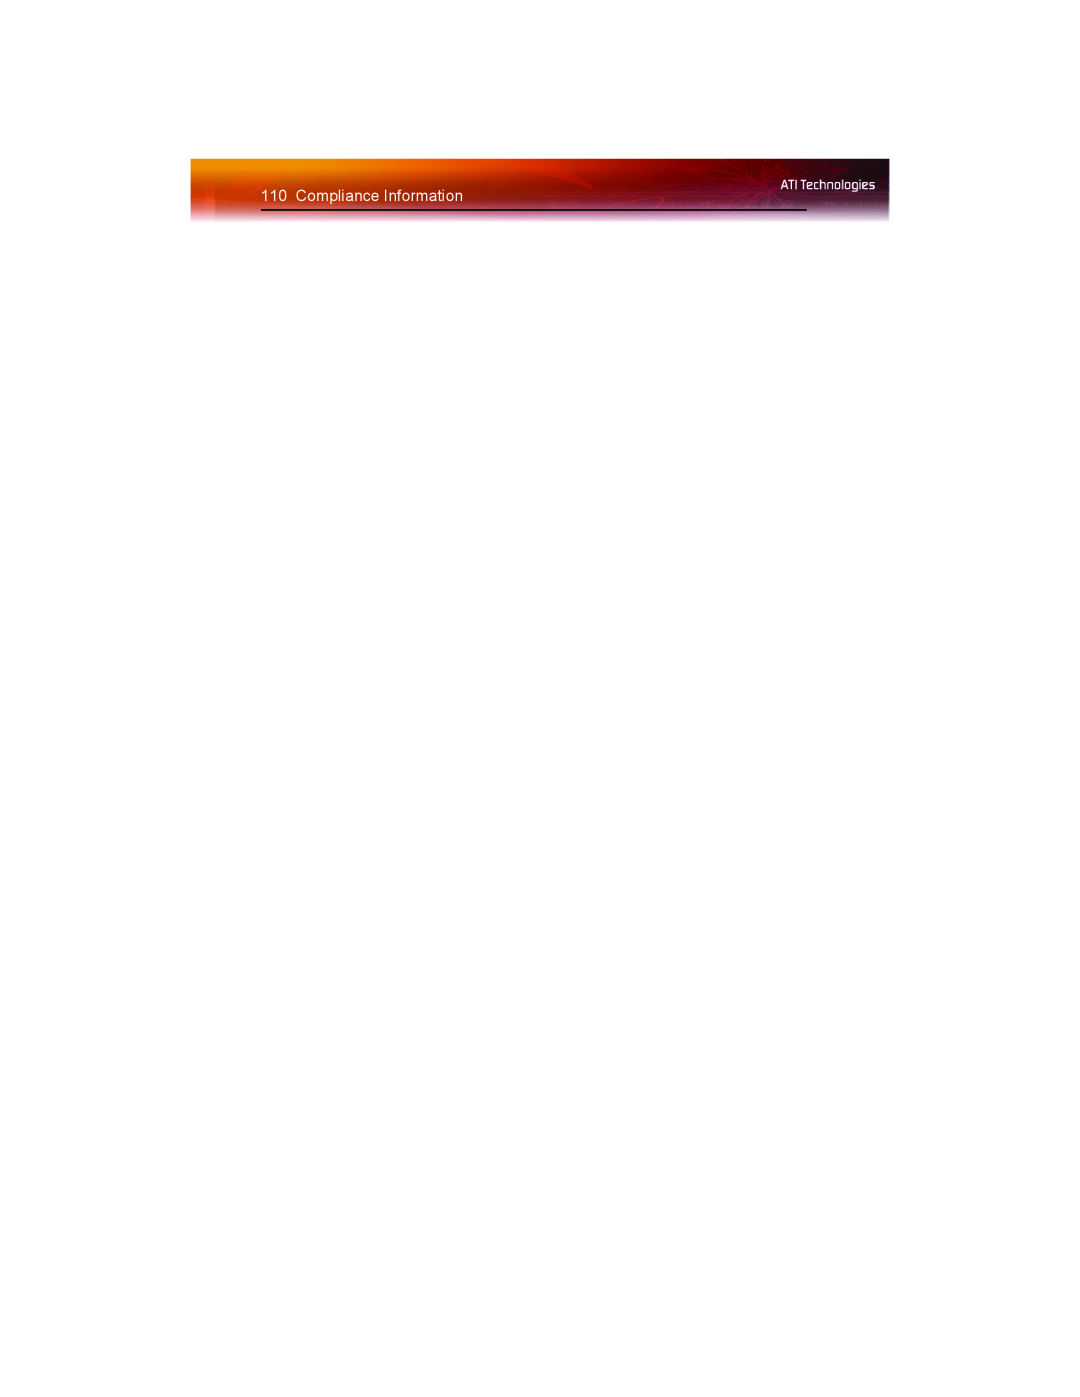 ATI Technologies X1550 SERIES manual Compliance Information 